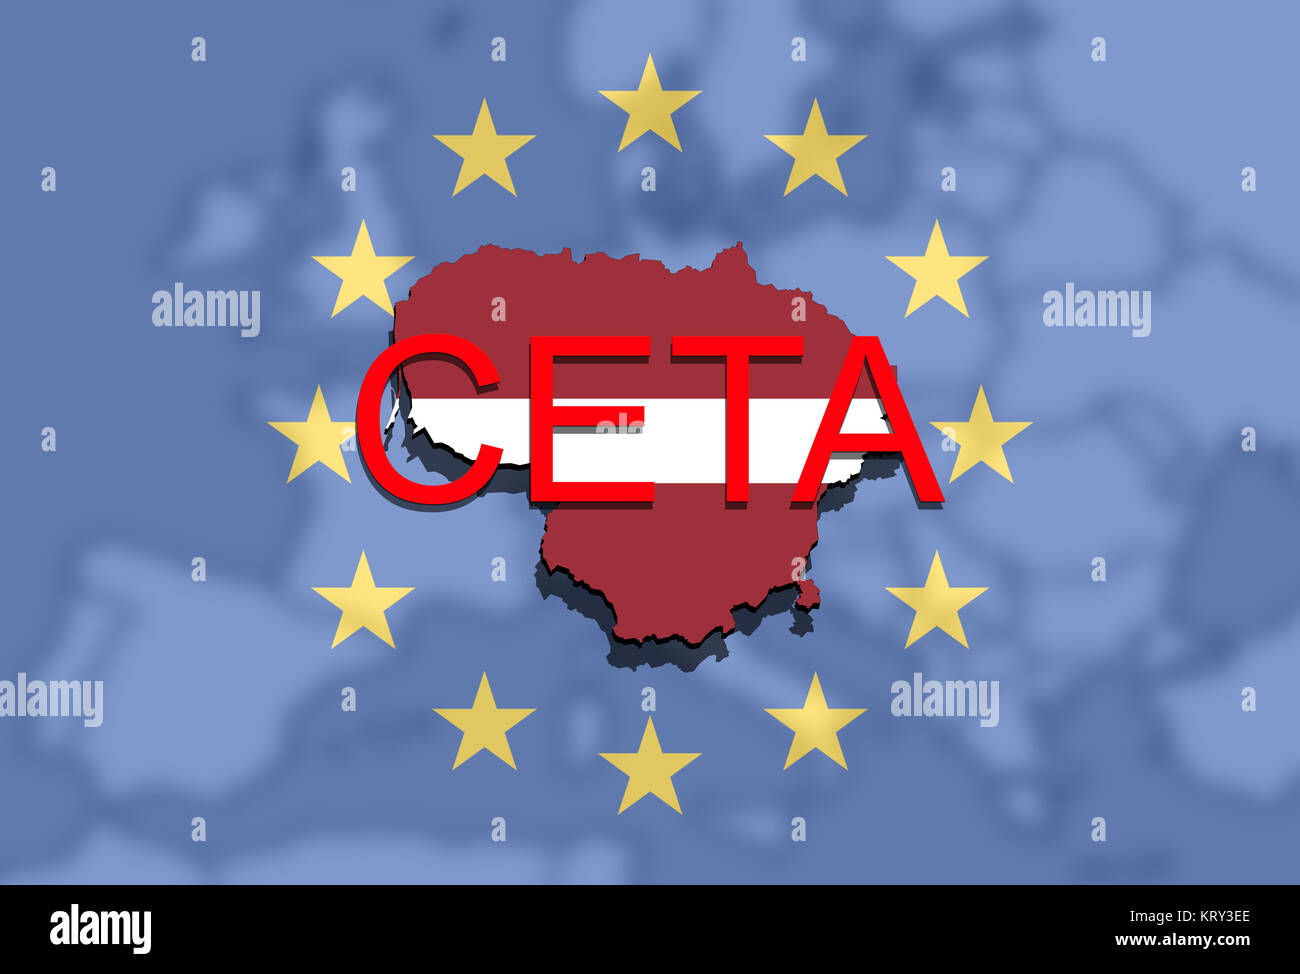 Â ceta - comprehensive economic and trade agreement,lithuania map Stock Photo